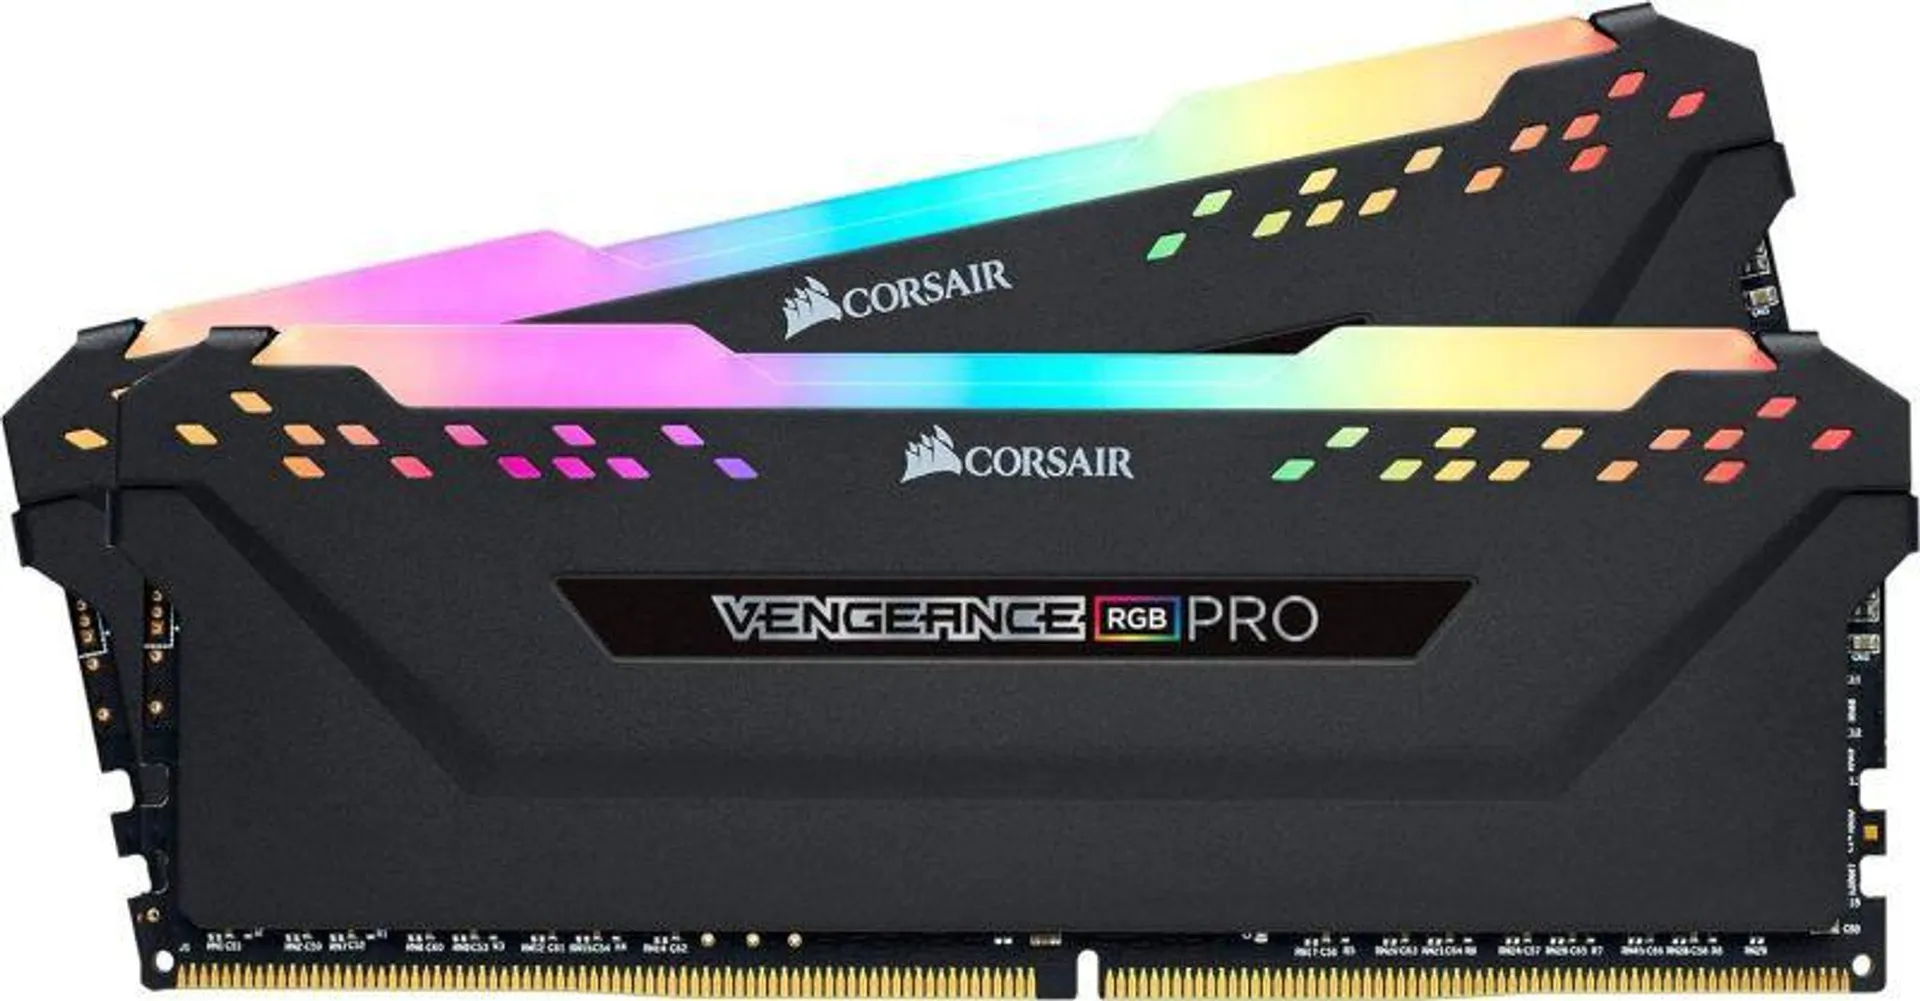 Corsair Vengeance RGB PRO 64GB DDR4 3600MHz CL18 Desktop Memory - Black